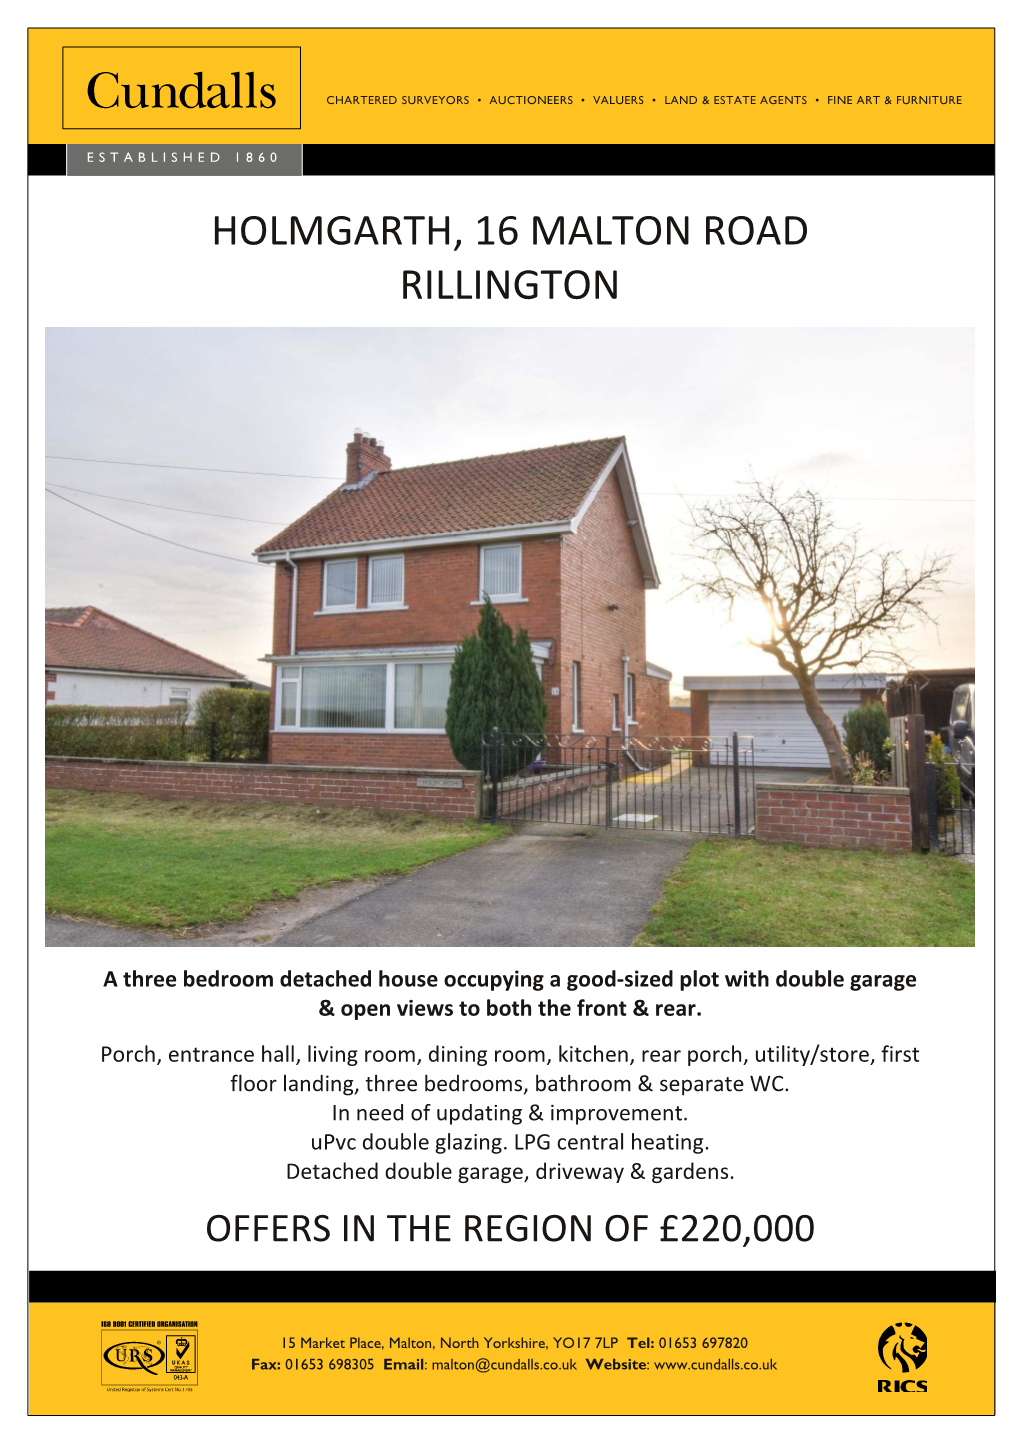 Holmgarth, 16 Malton Road Rillington